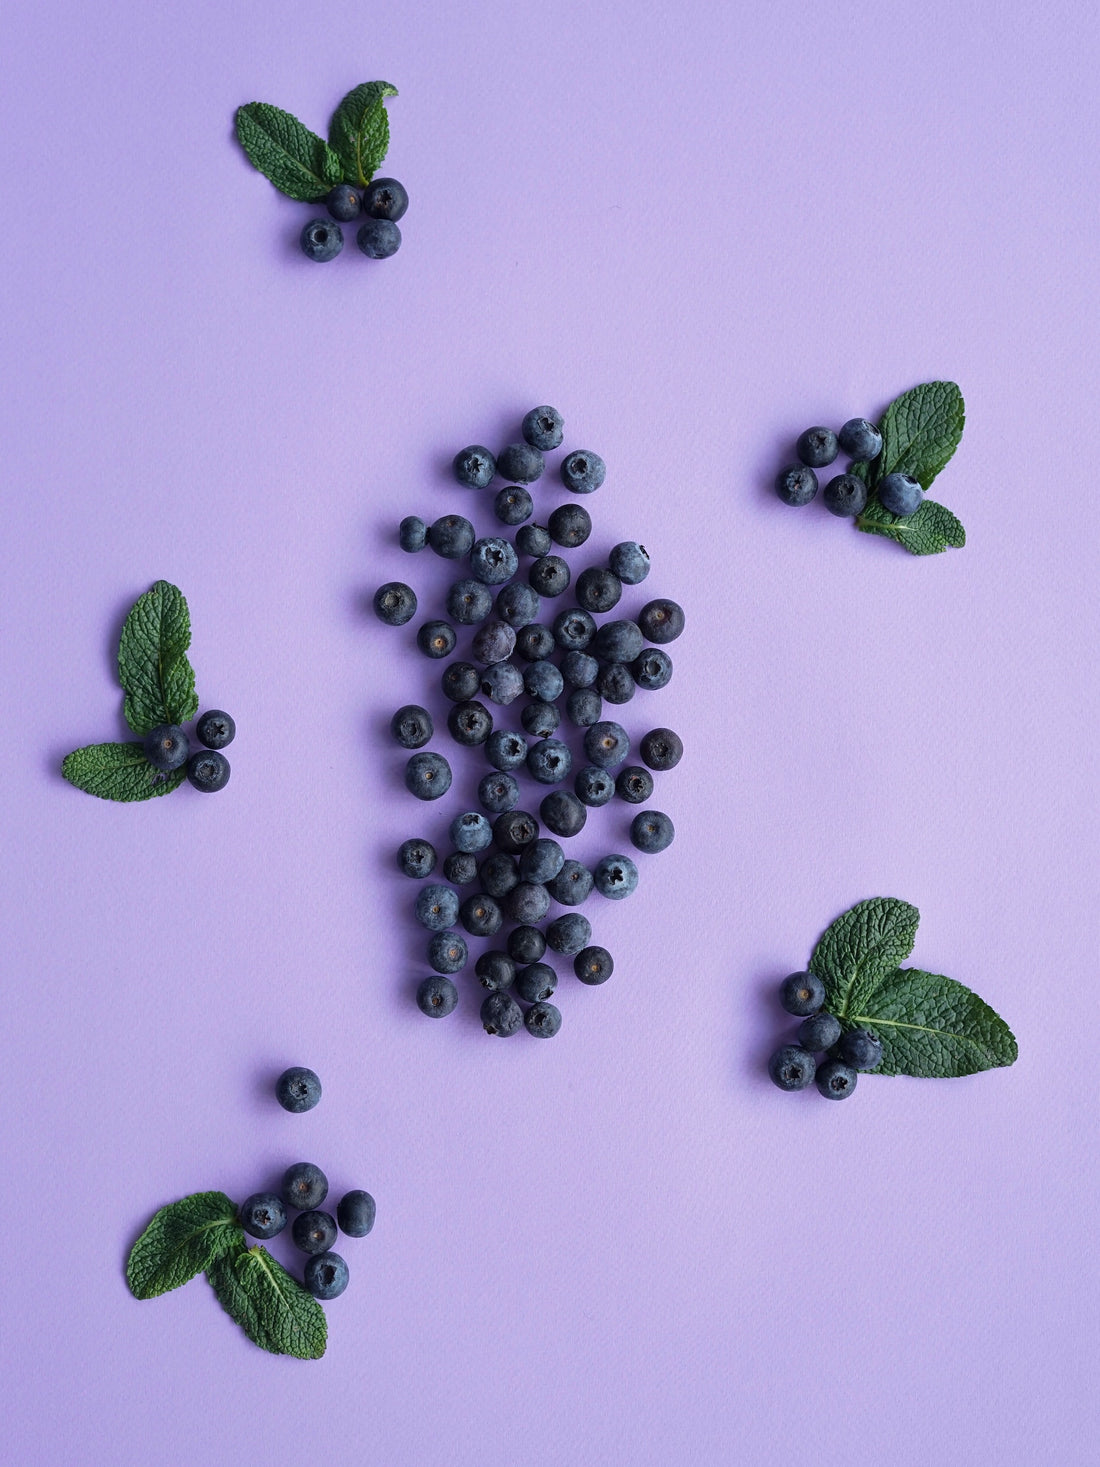 Are Blueberries Good For Diabetics?